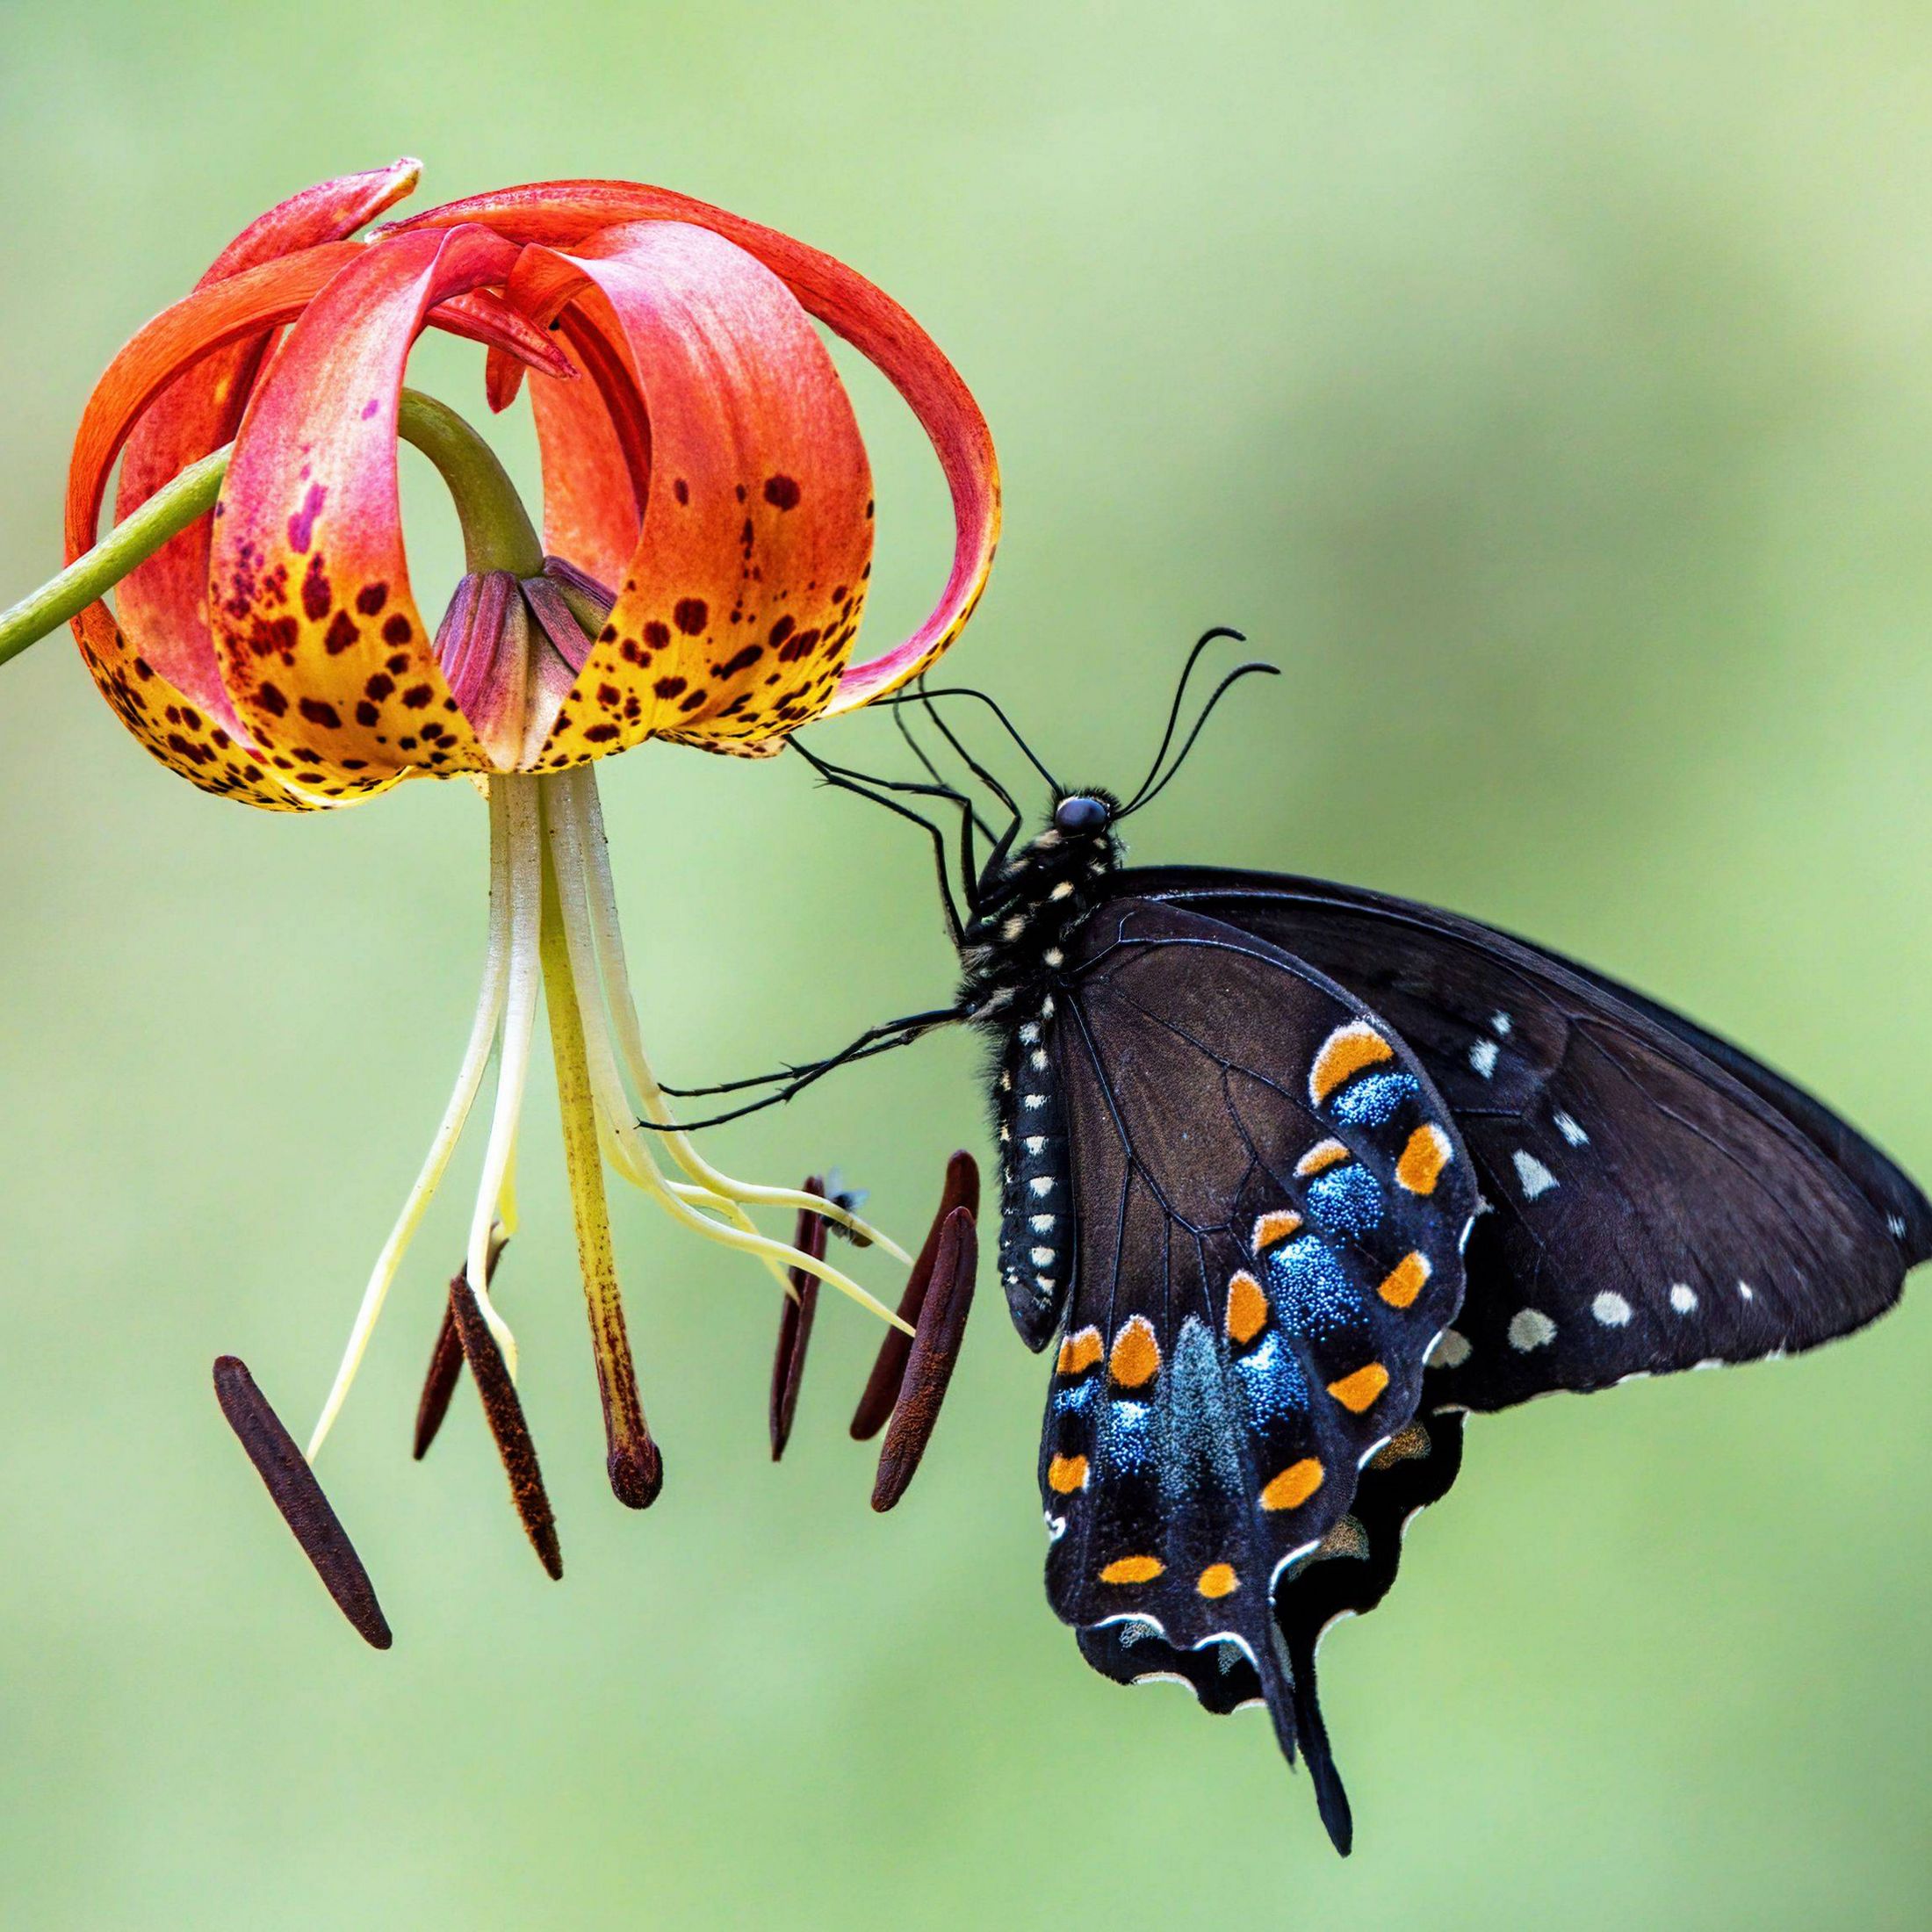 Black swallowtail butterfly hangs from turks cap lily bloom.